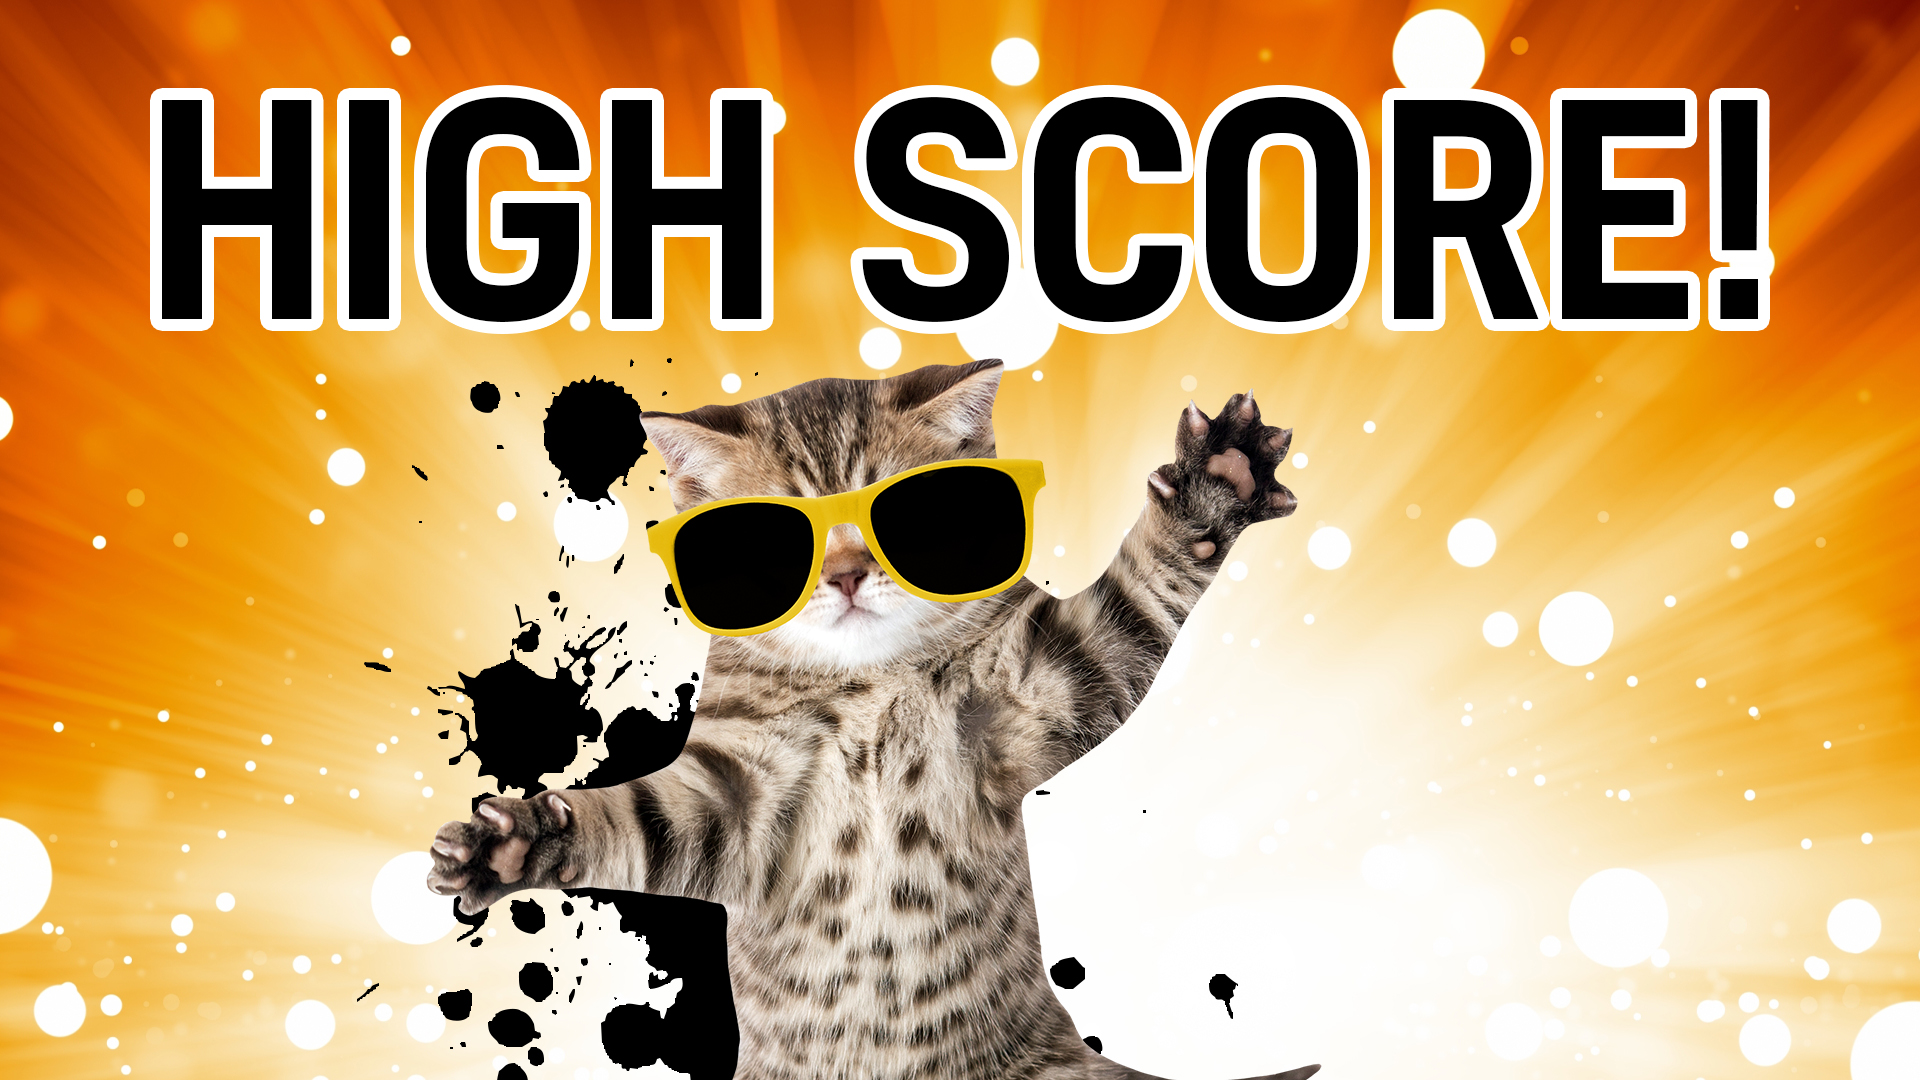 Result: High score